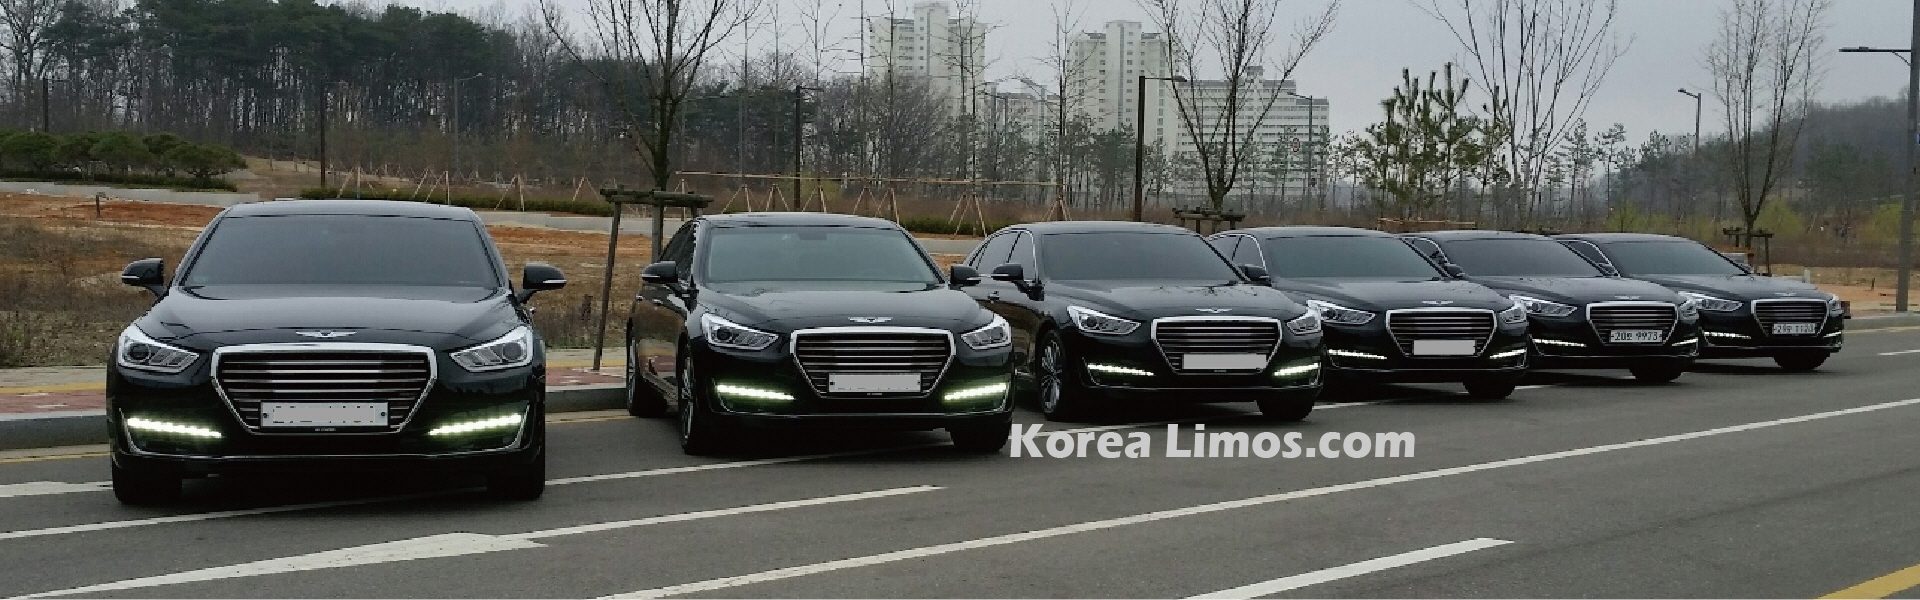 Korea Car Service with driver